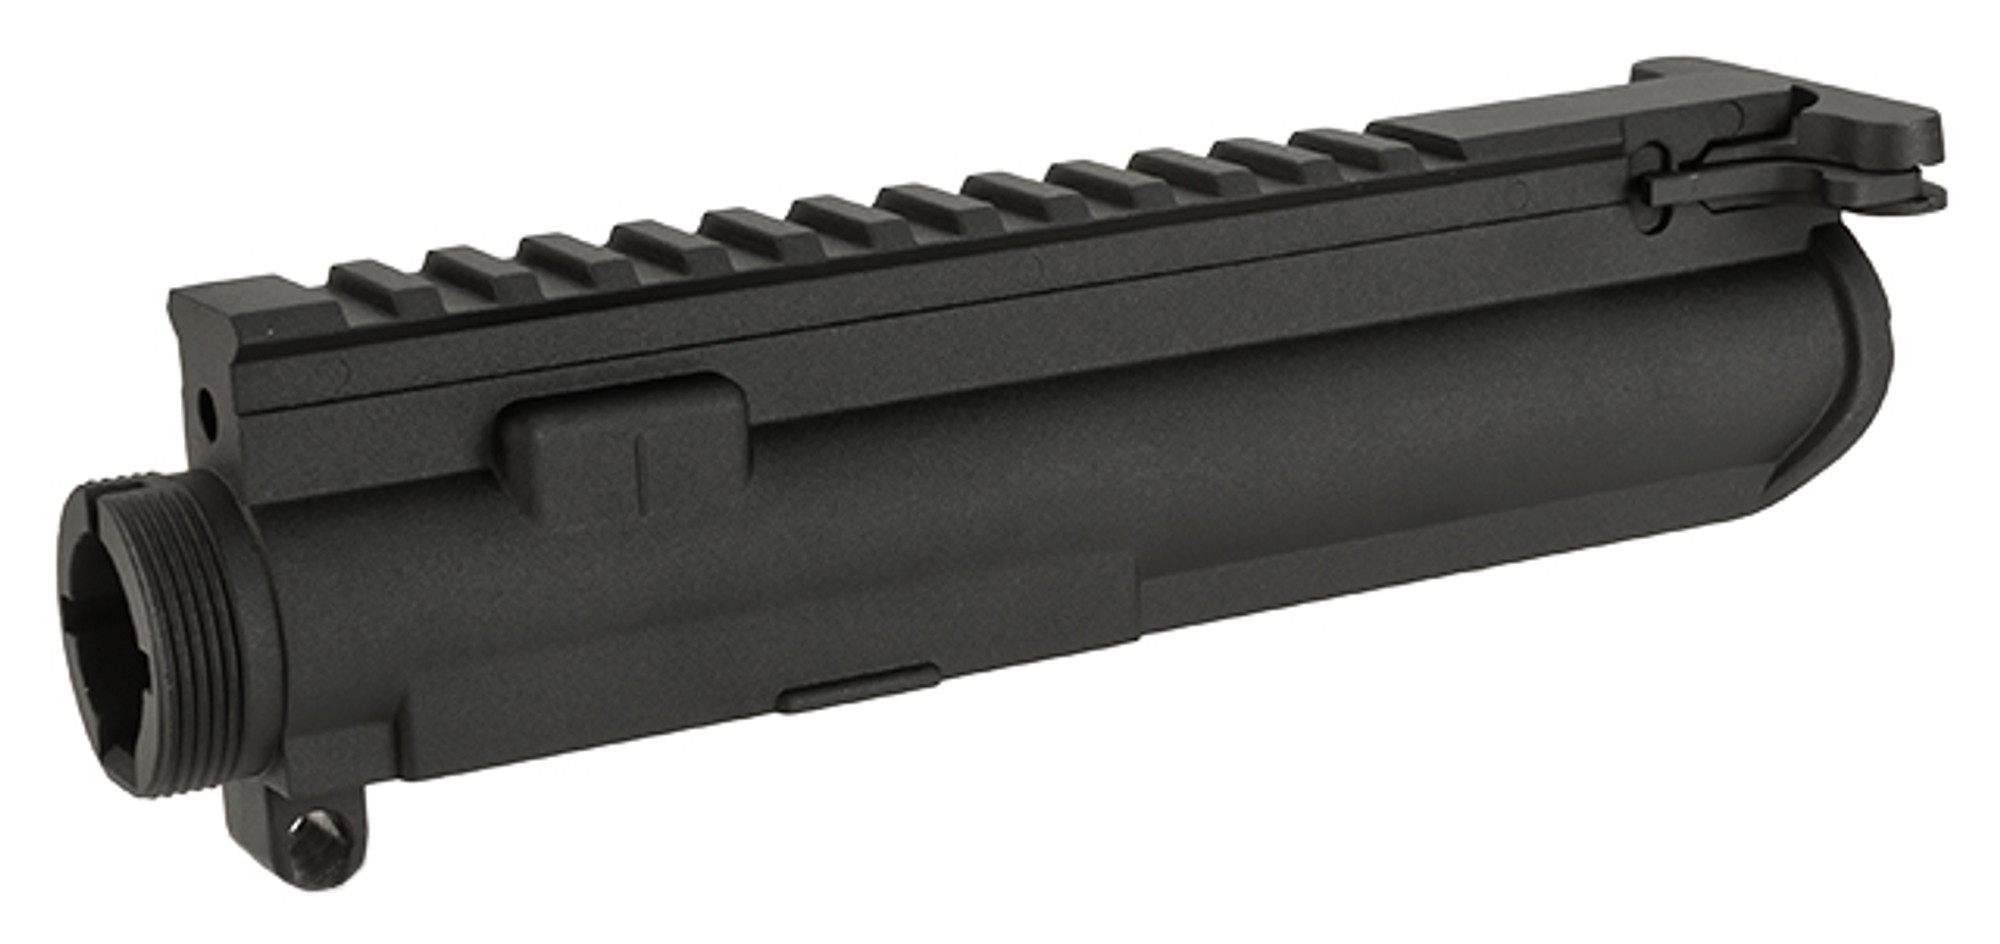 Krytac Trident Series Upper Receiver for M4  M16 Airsoft AEG Rifles - Black